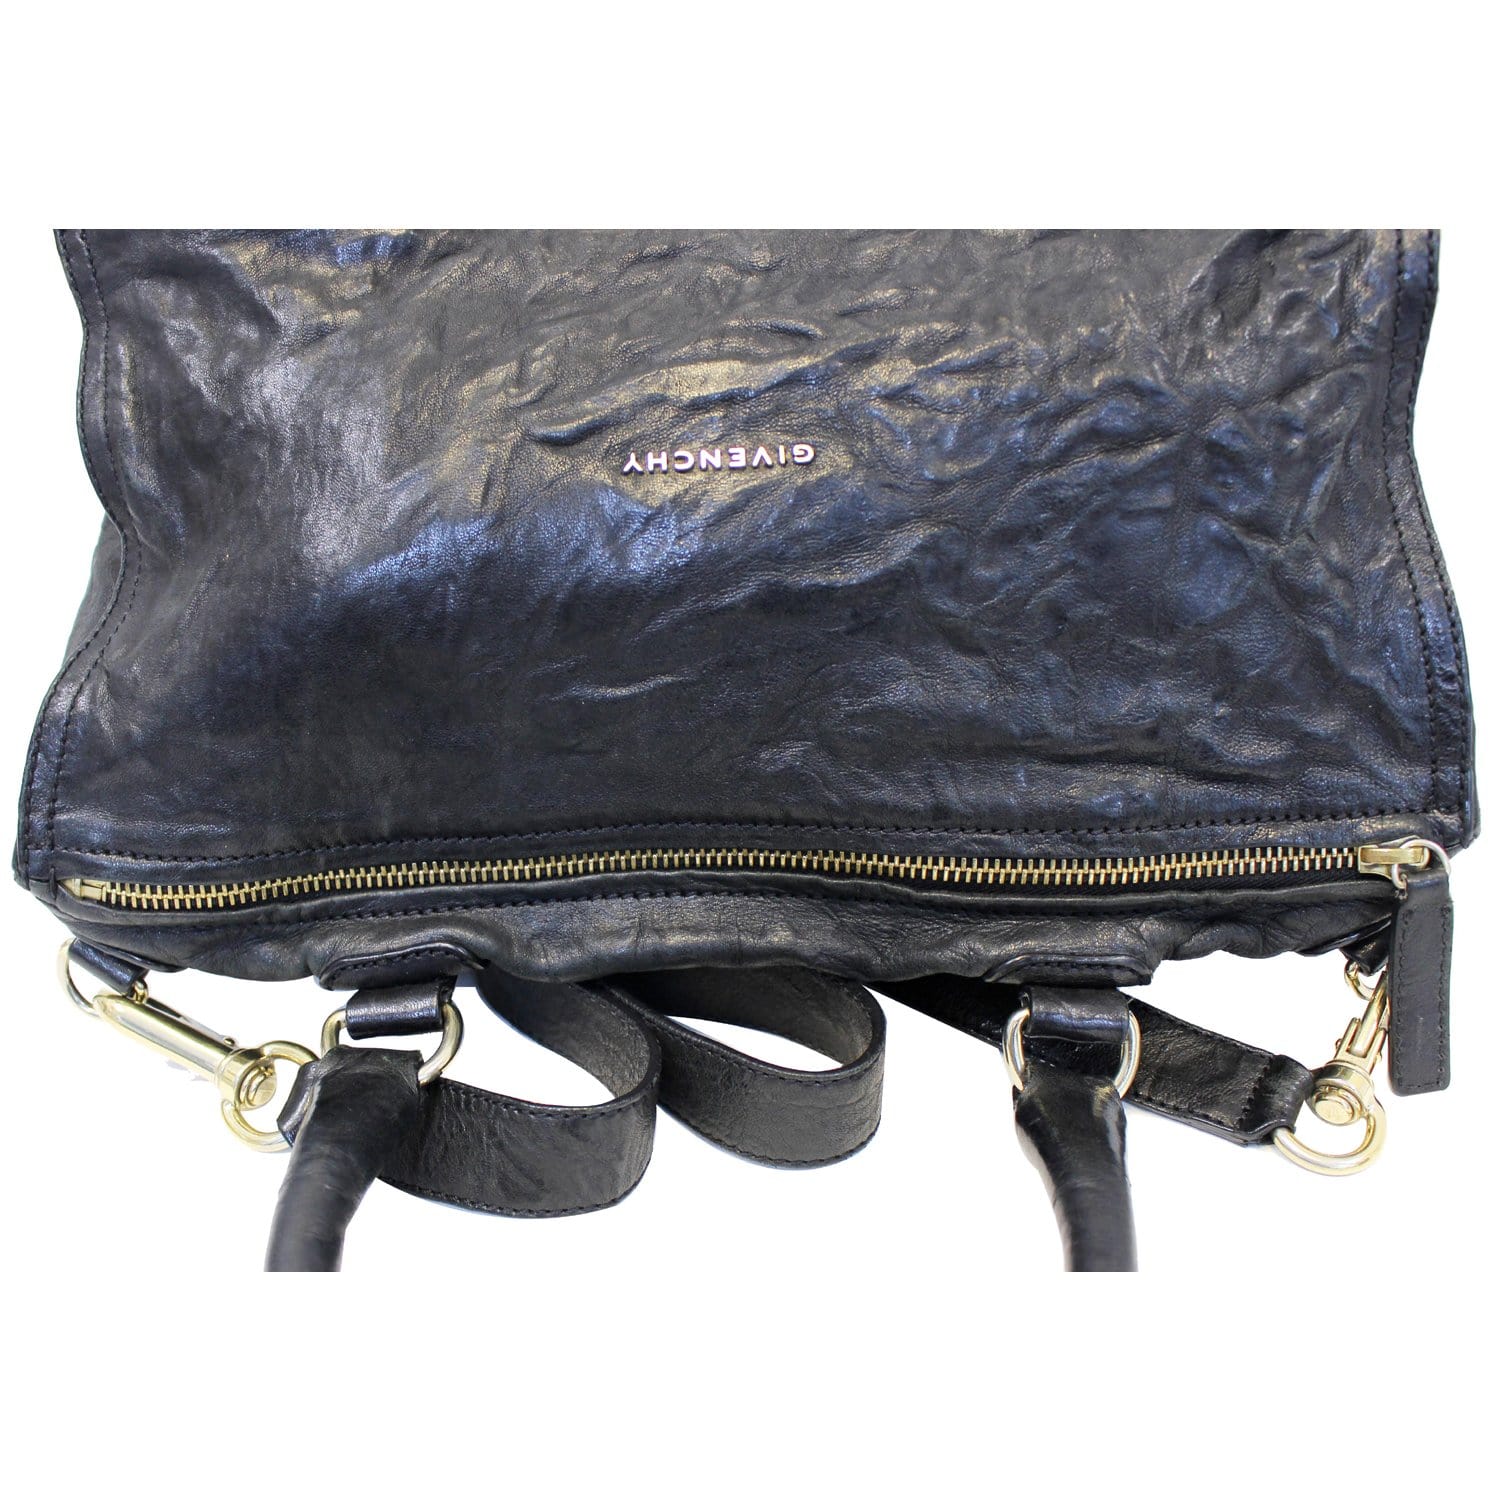 Givenchy Pandora Bag REVIEW // Medium Pandora Bag in Aged Black Leather 